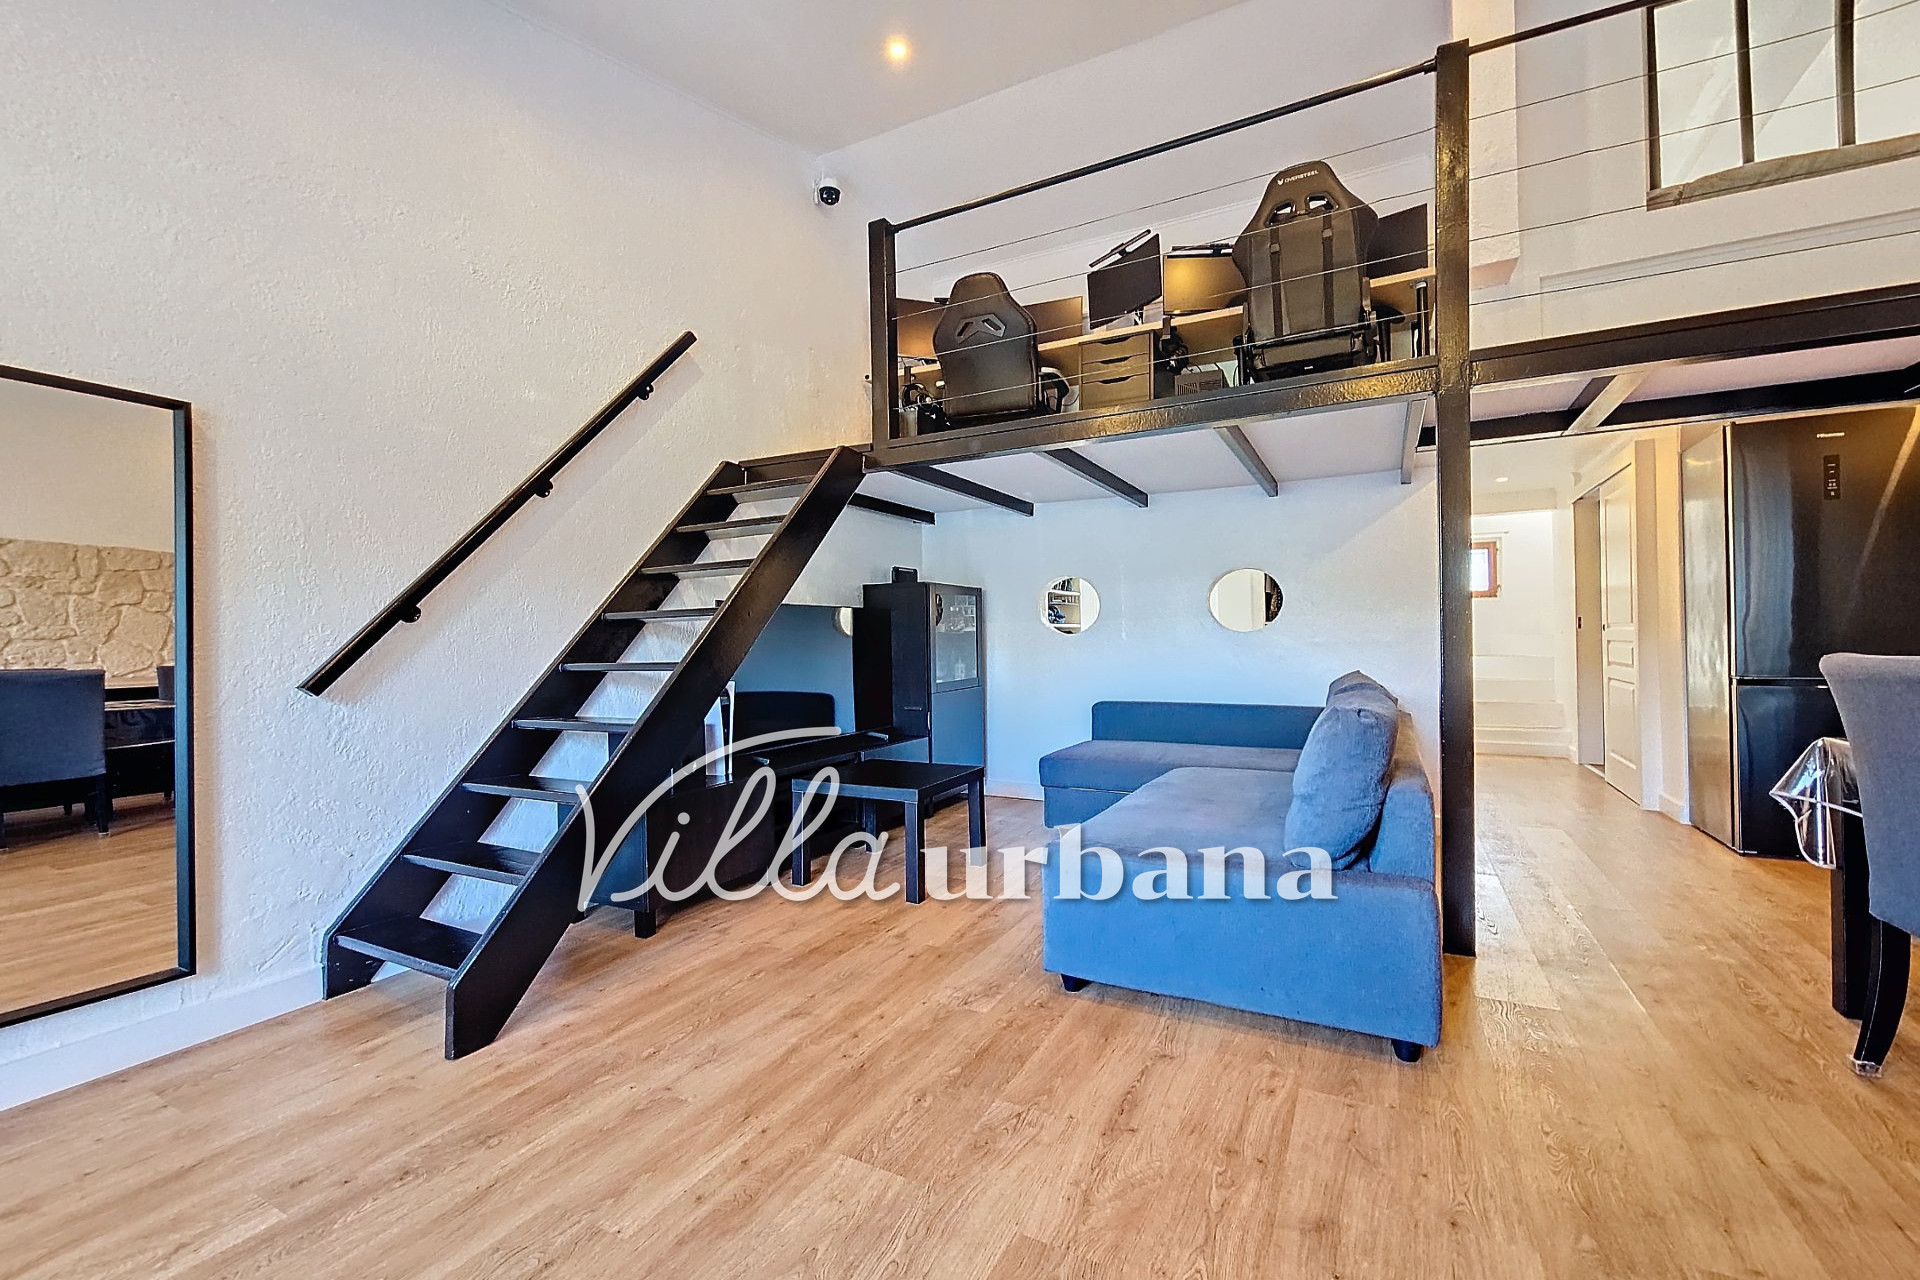 Vente Appartement 50m² à Antibes (06600) - Villa Urbana